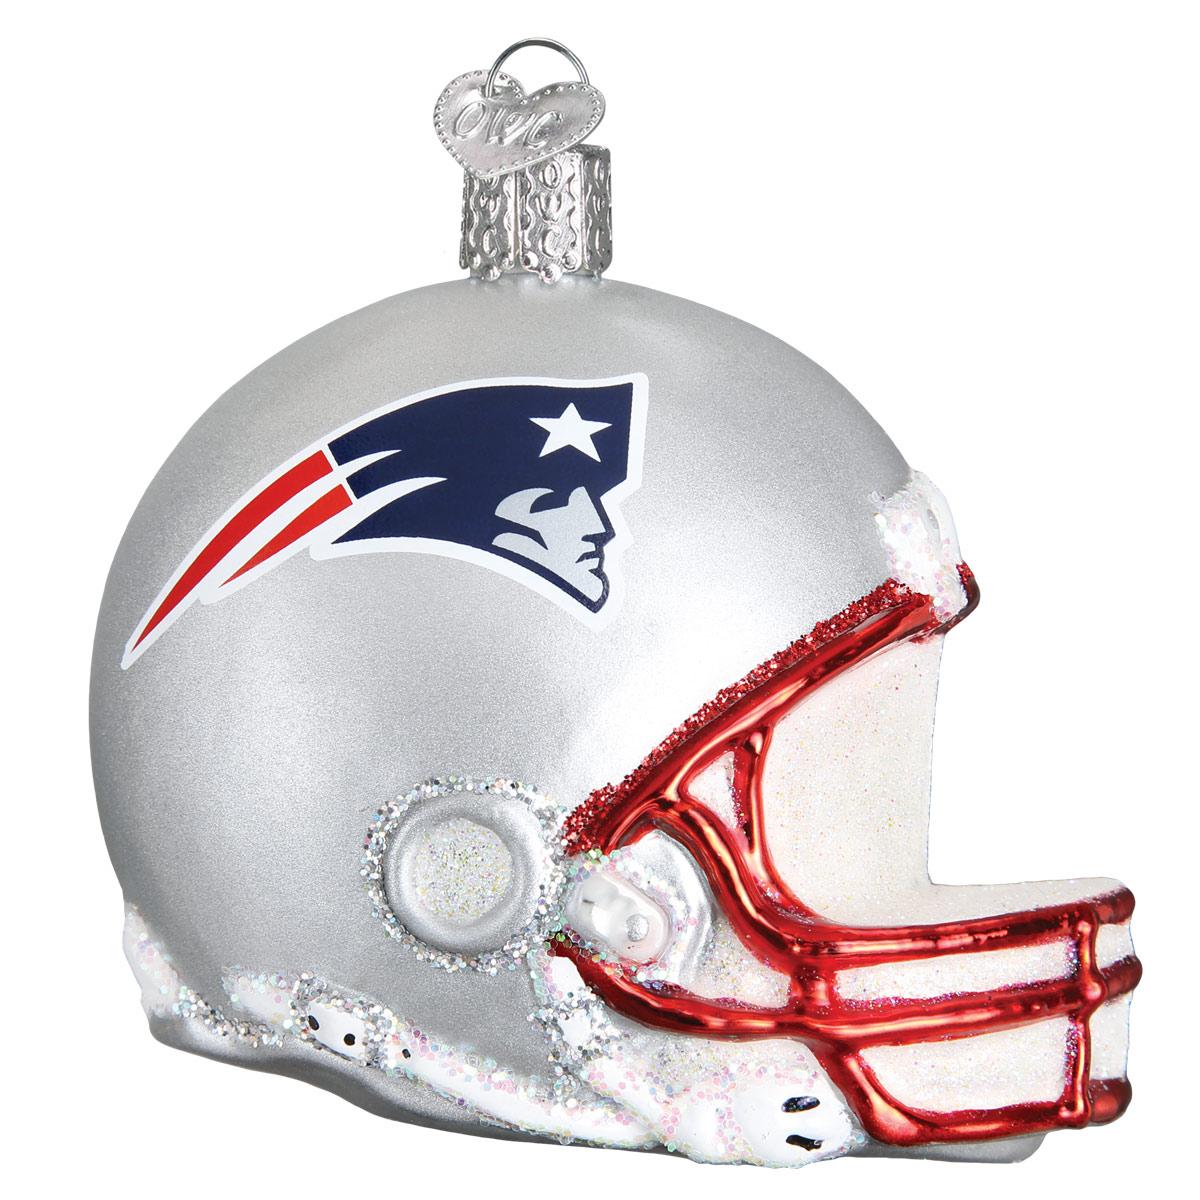 New England Patriots Helmet Ornament - Old World Christmas